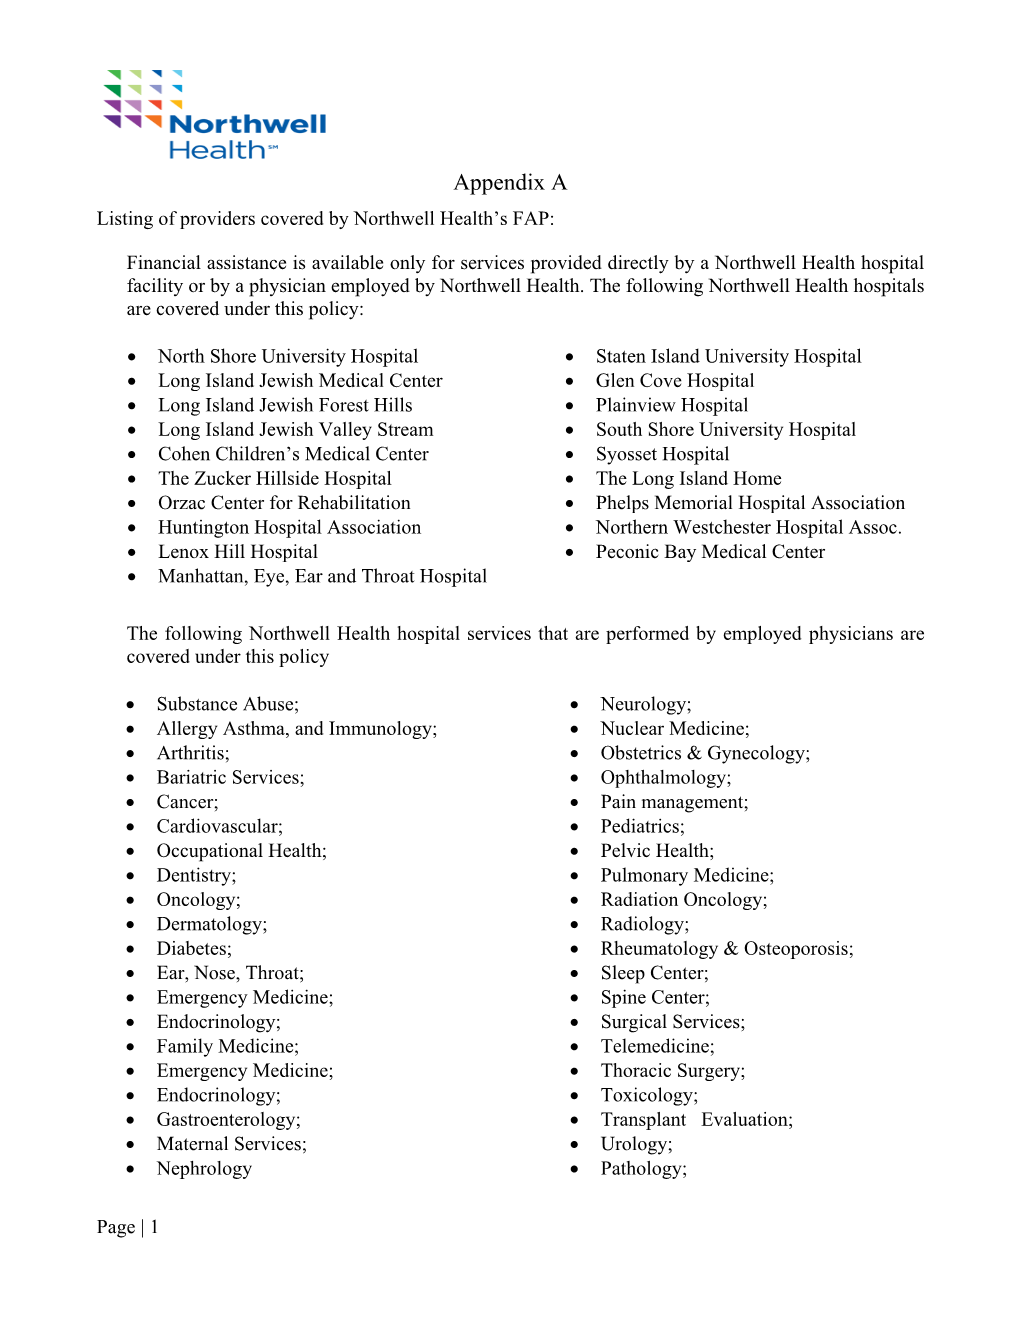 APPENDIX a Hospital and Service Listing (PDF)